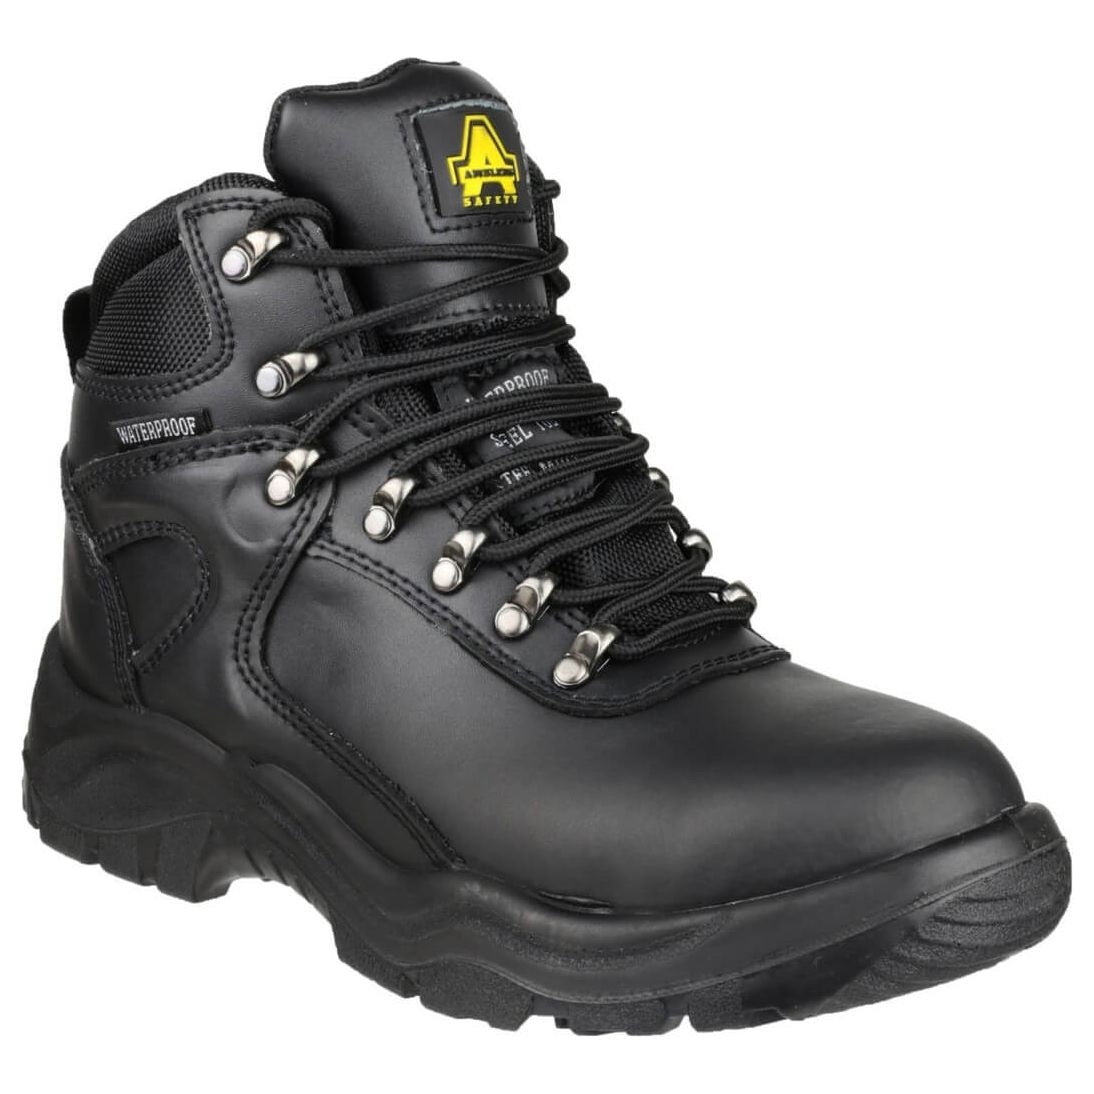 Amblers Fs218 Waterproof Safety Boots Womens - workweargurus.com